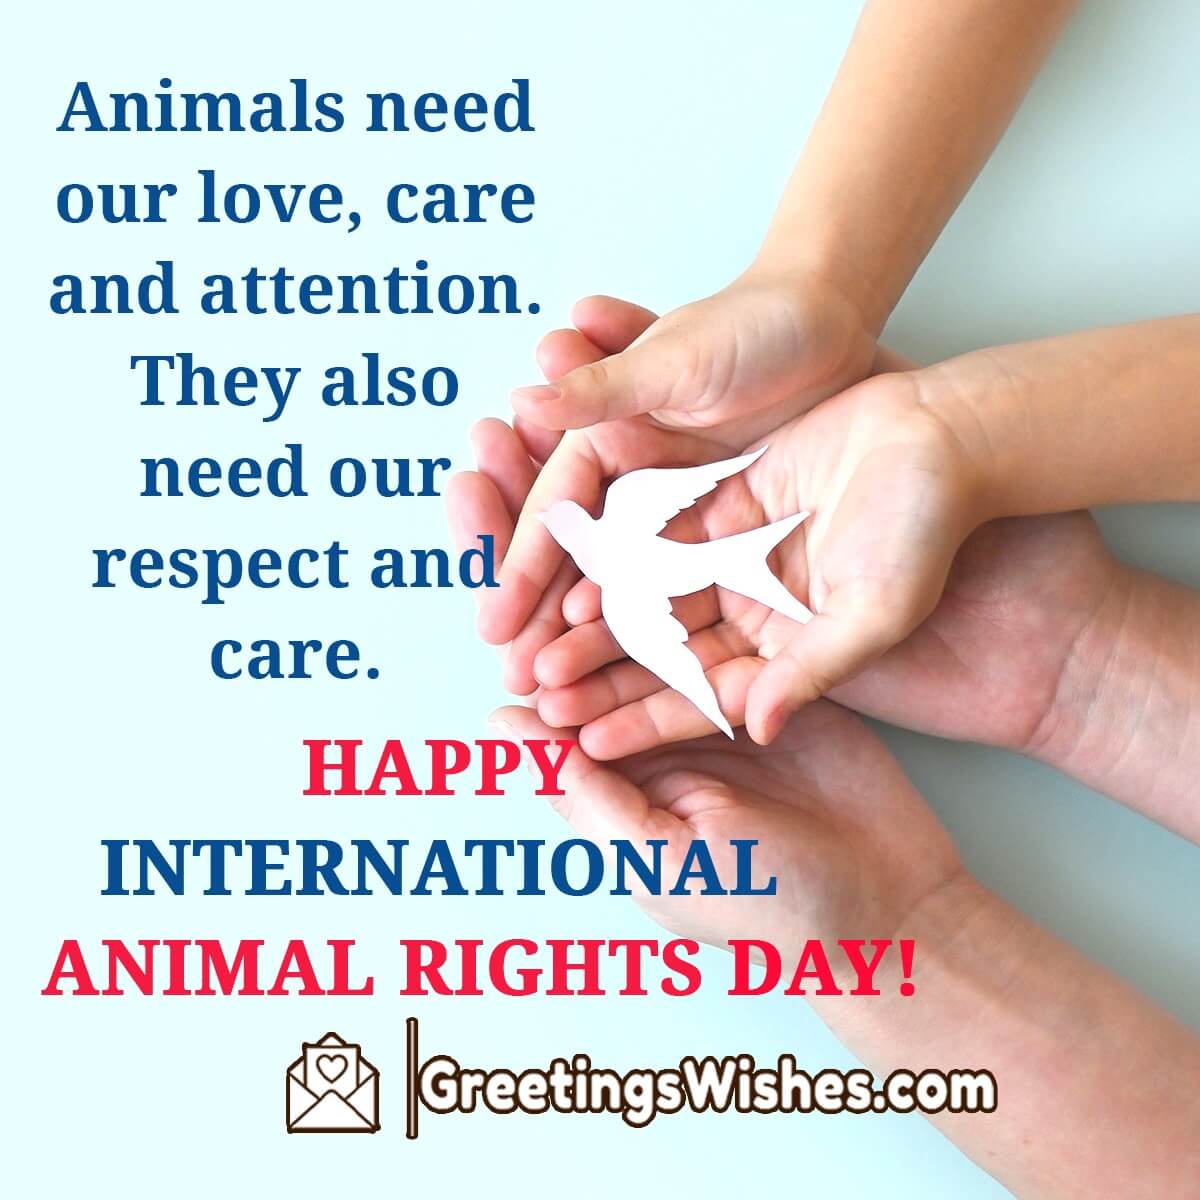 Happy International Animal Rights Day